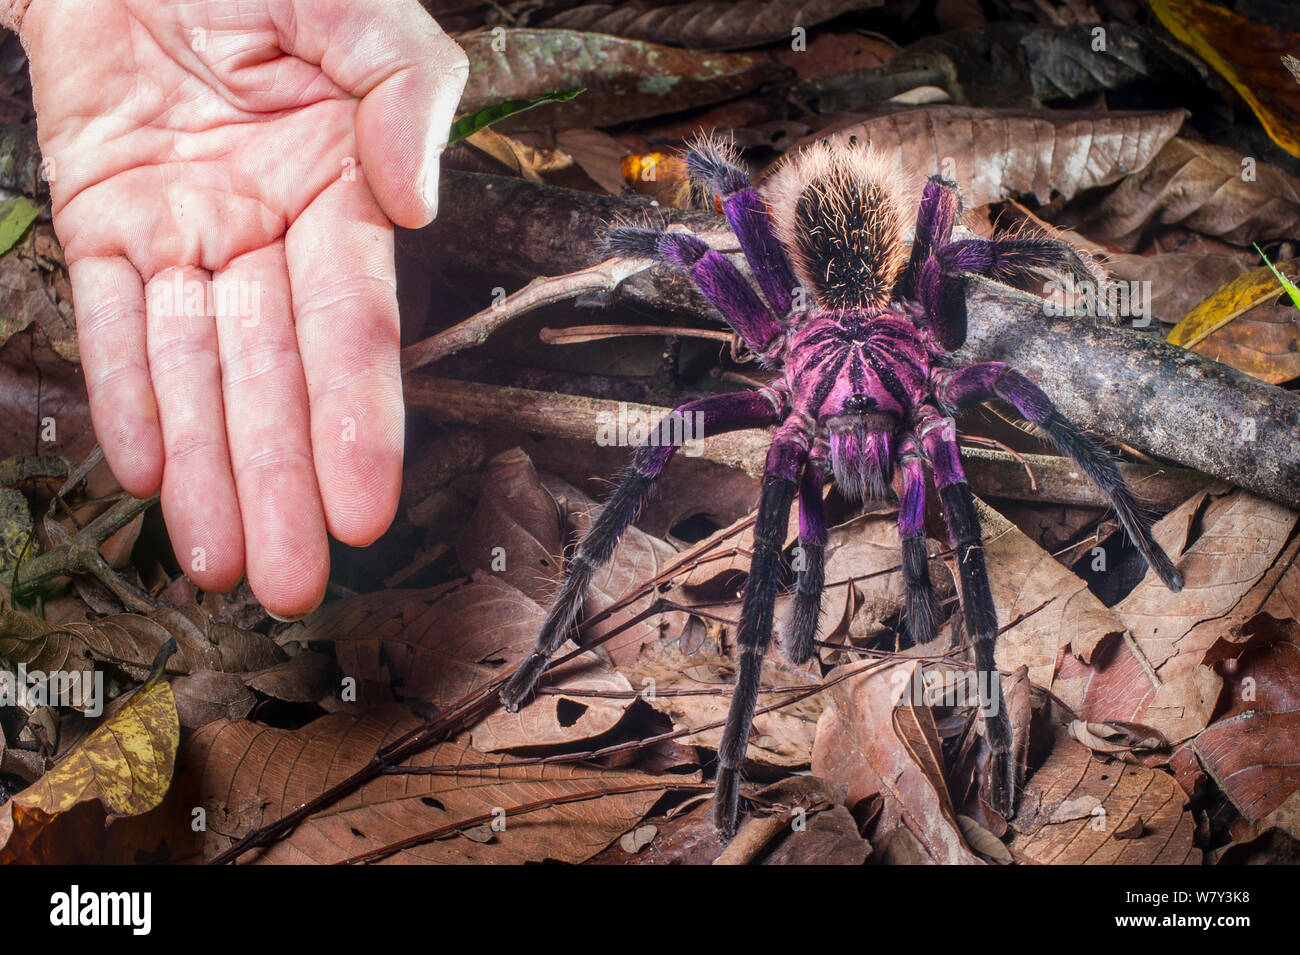 Flor púrpura colombiano Tarantula (Xenesthis immanis) con la mano humana para escala (leg span 22-23cm). Paujil Reserva Natural del Valle del Magdalena, Colombia, Sur América. Foto de stock